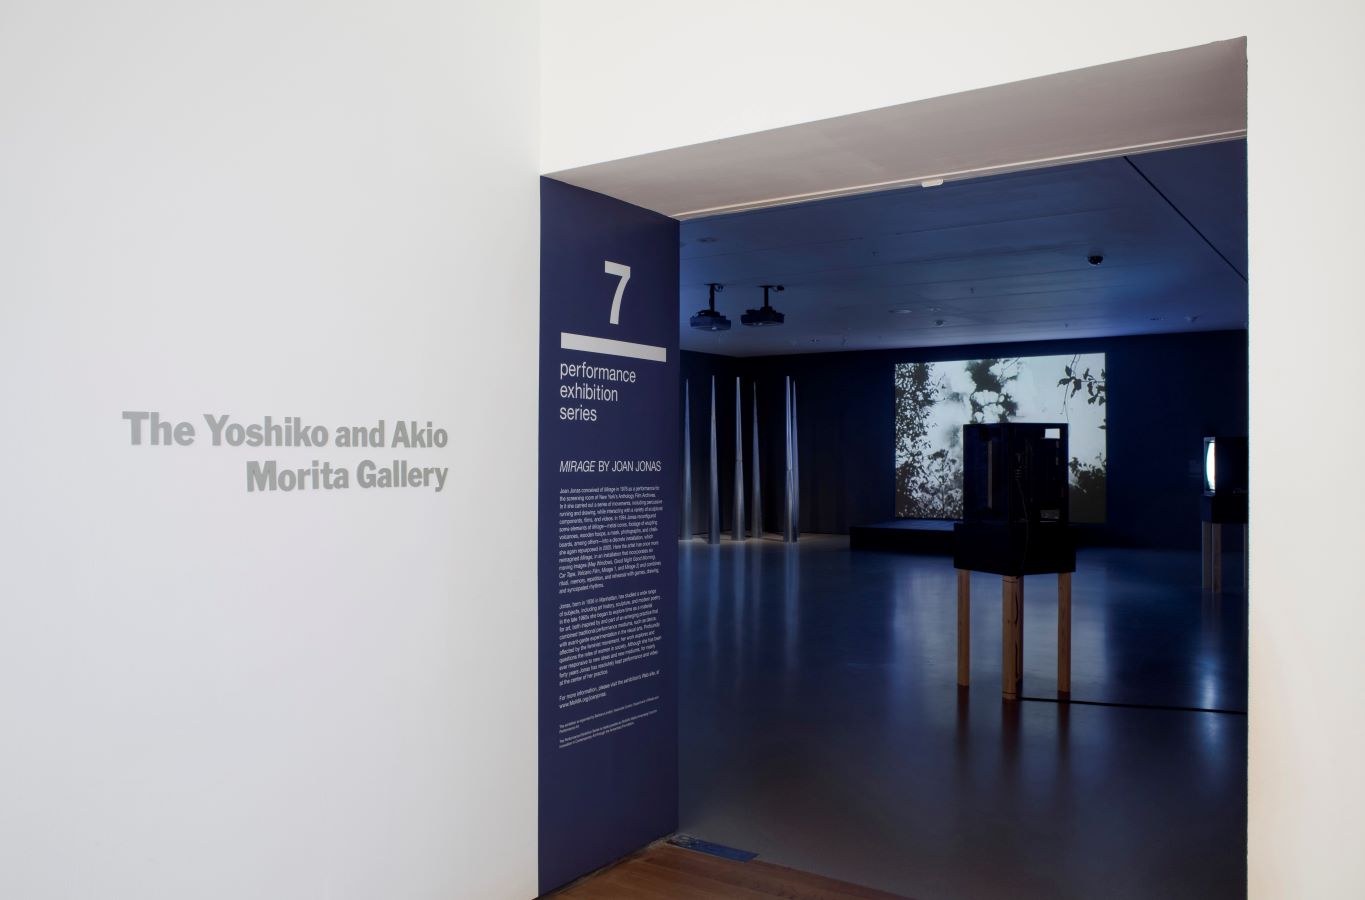 Entrance into exhibition. Wall reads: “The Yoshiko and Akio Morita Gallery”